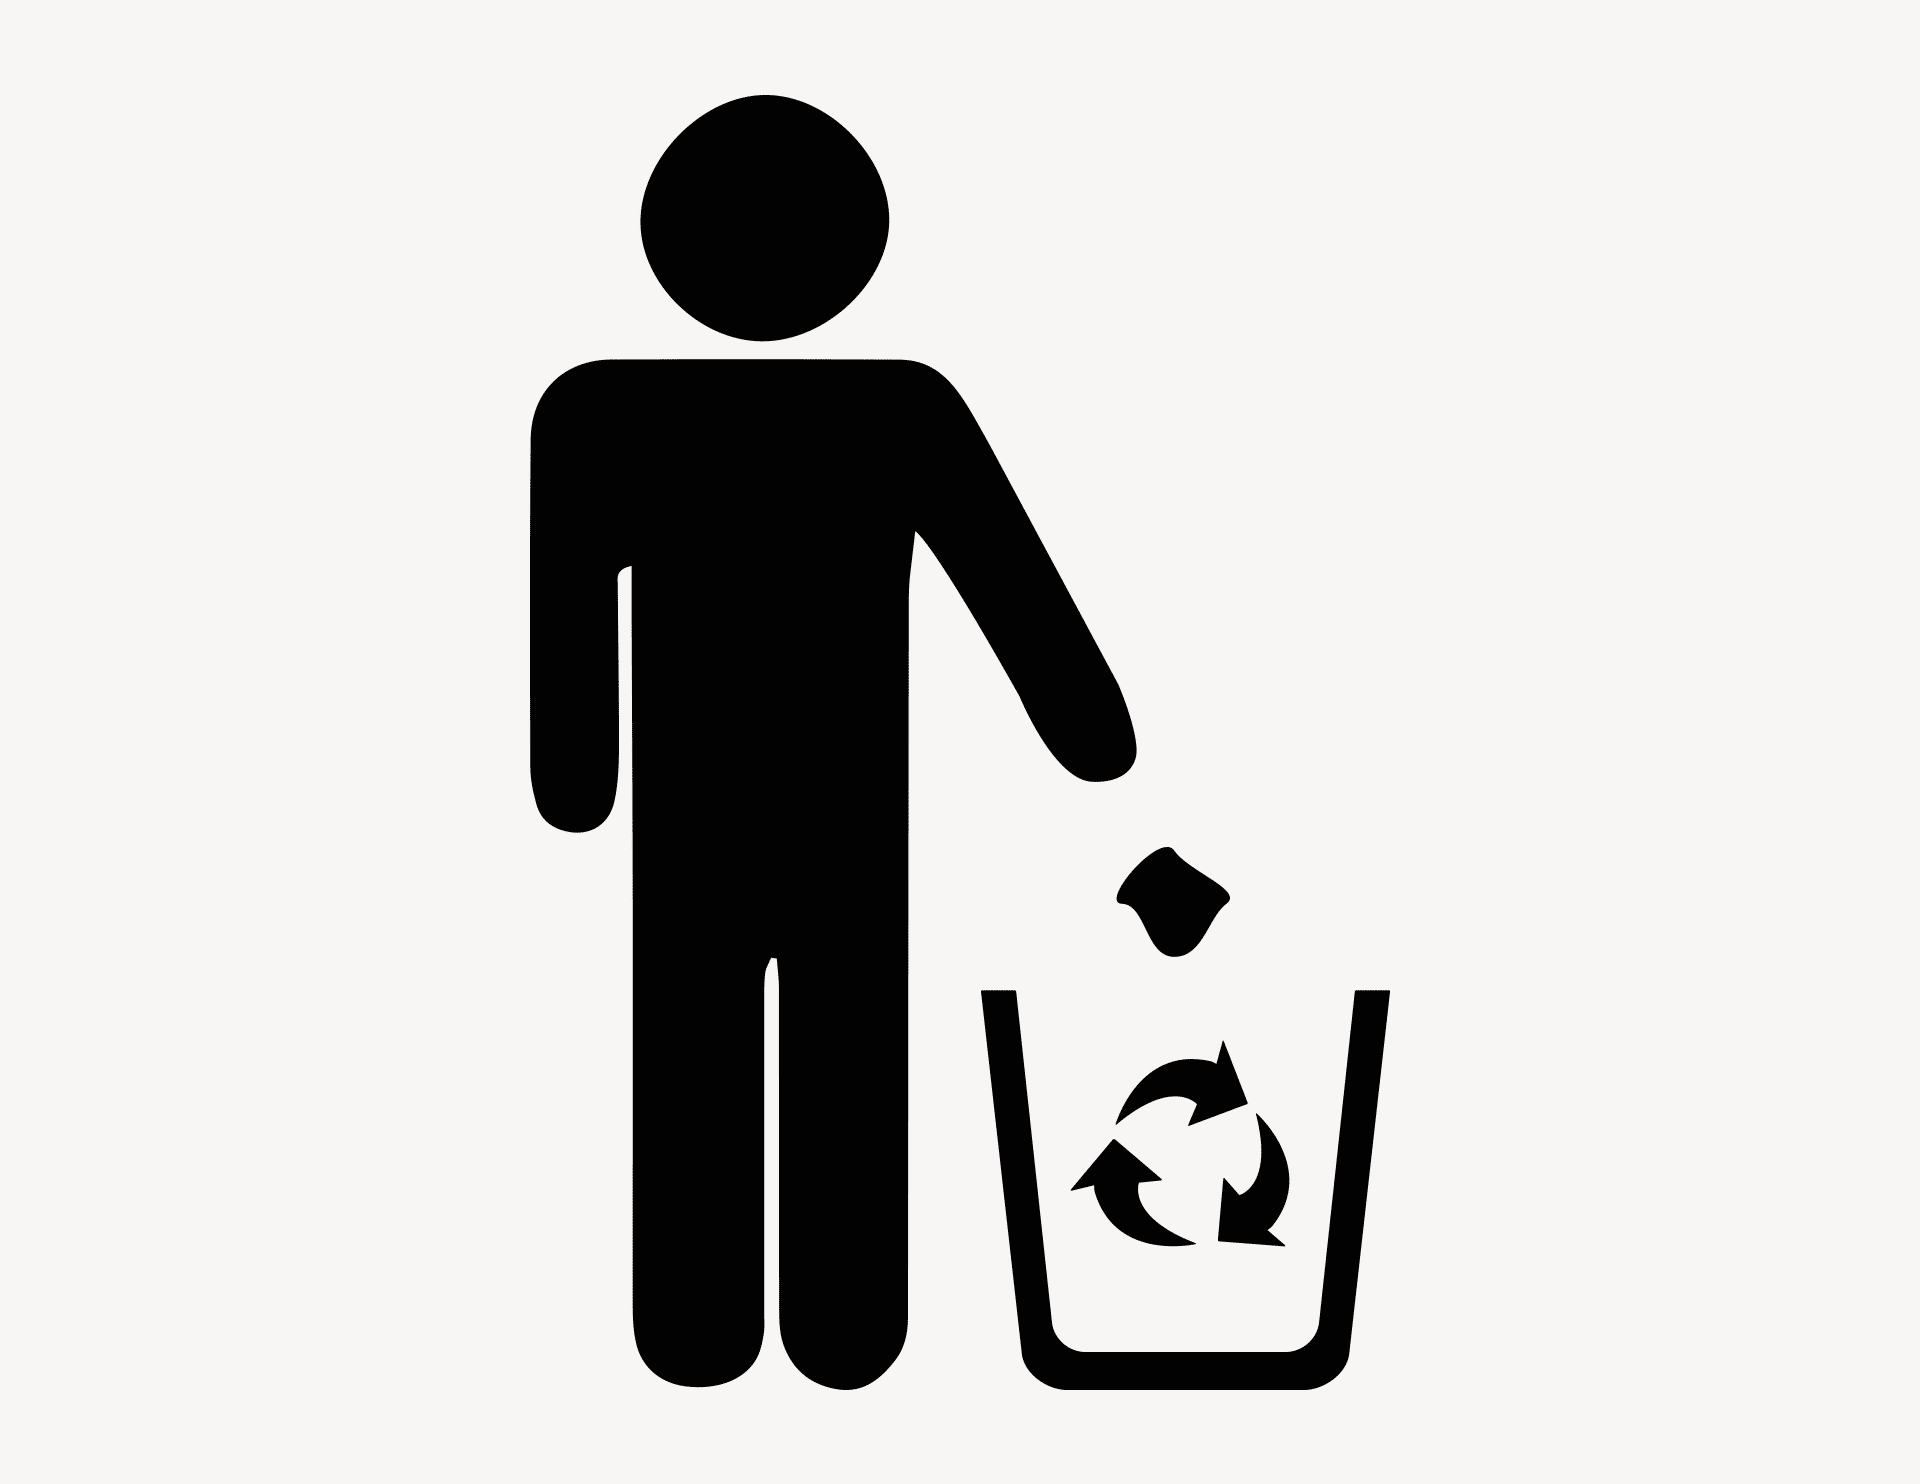 Abfall recycling - Aufkleber für Gewerbe